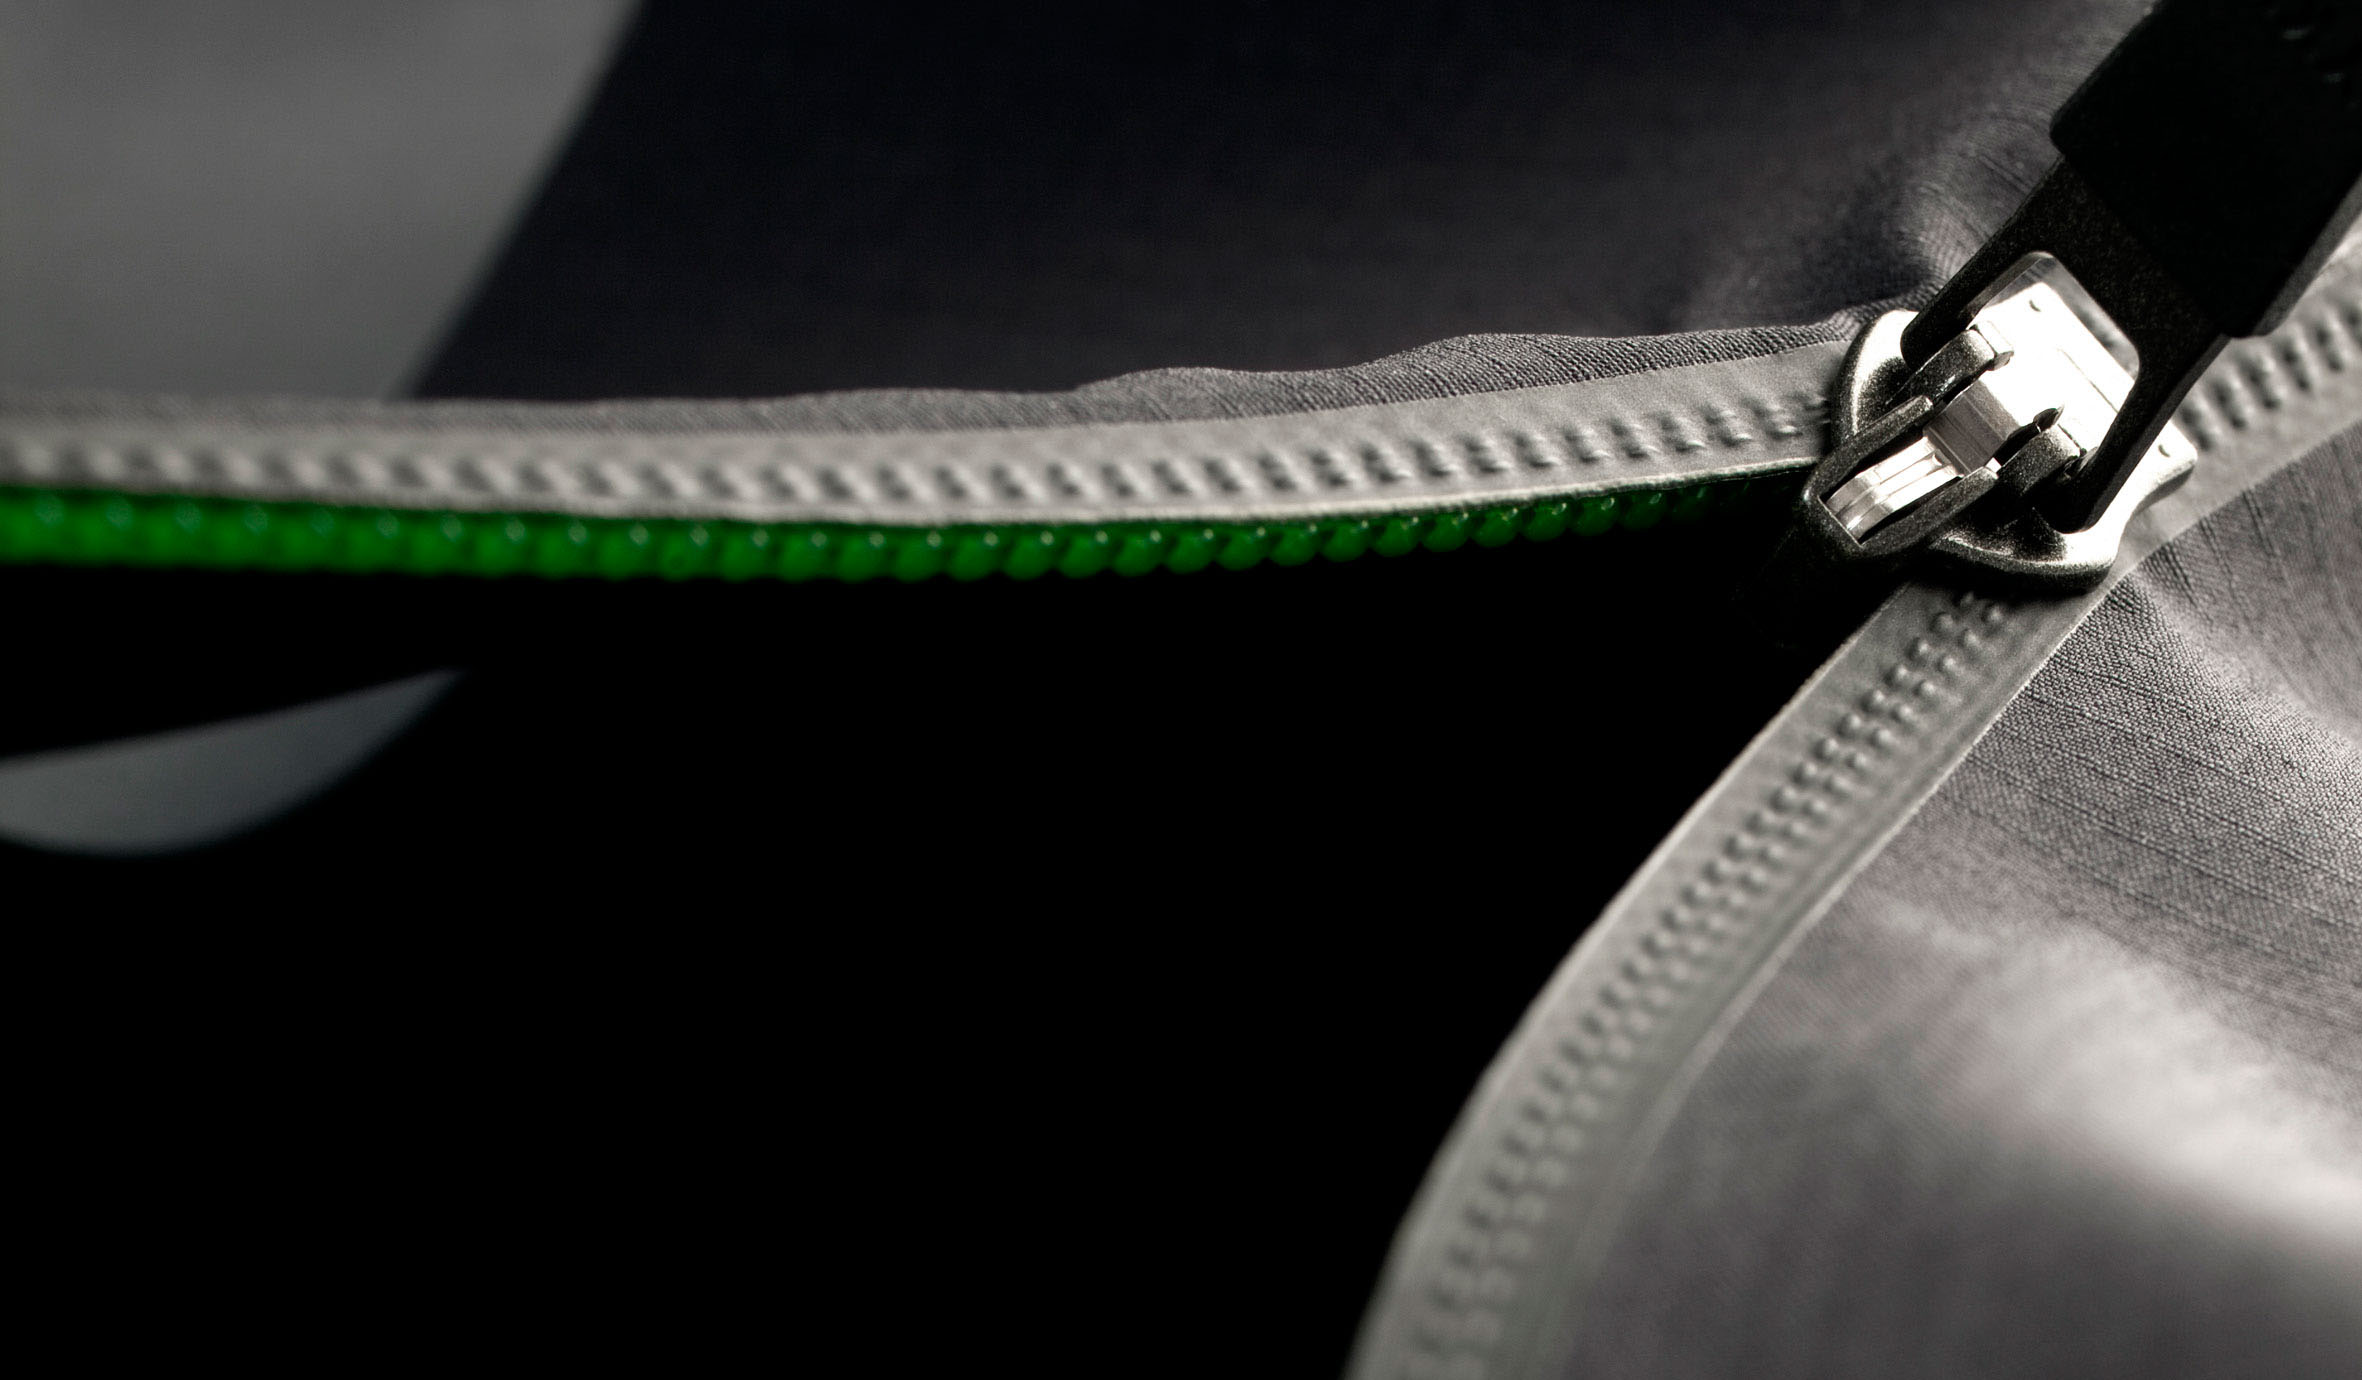 YKK launches revolutionary zipper concept